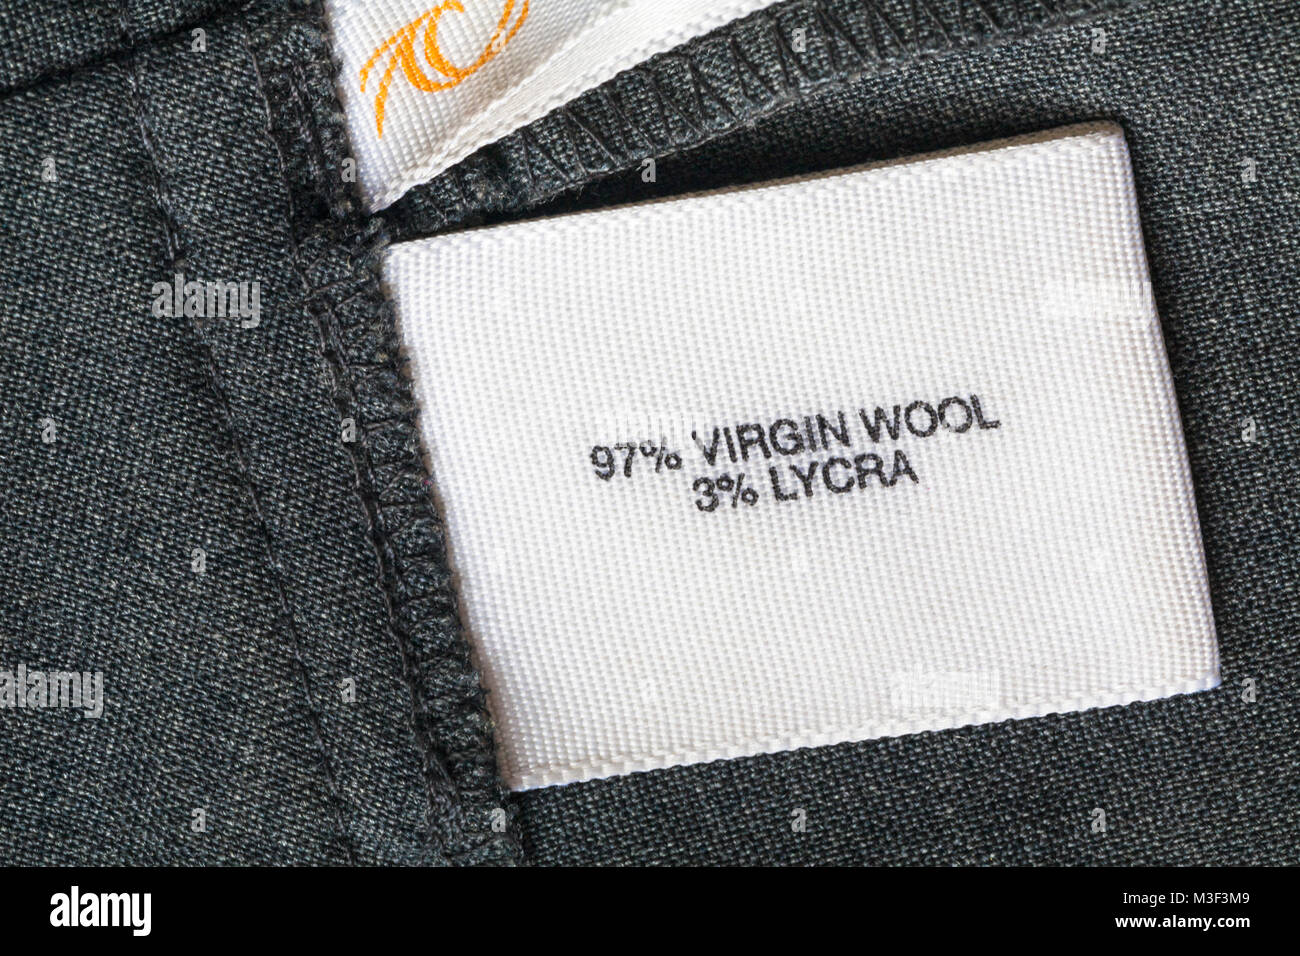 97% virgin wool 3% lycra label in clothing garment Stock Photo - Alamy